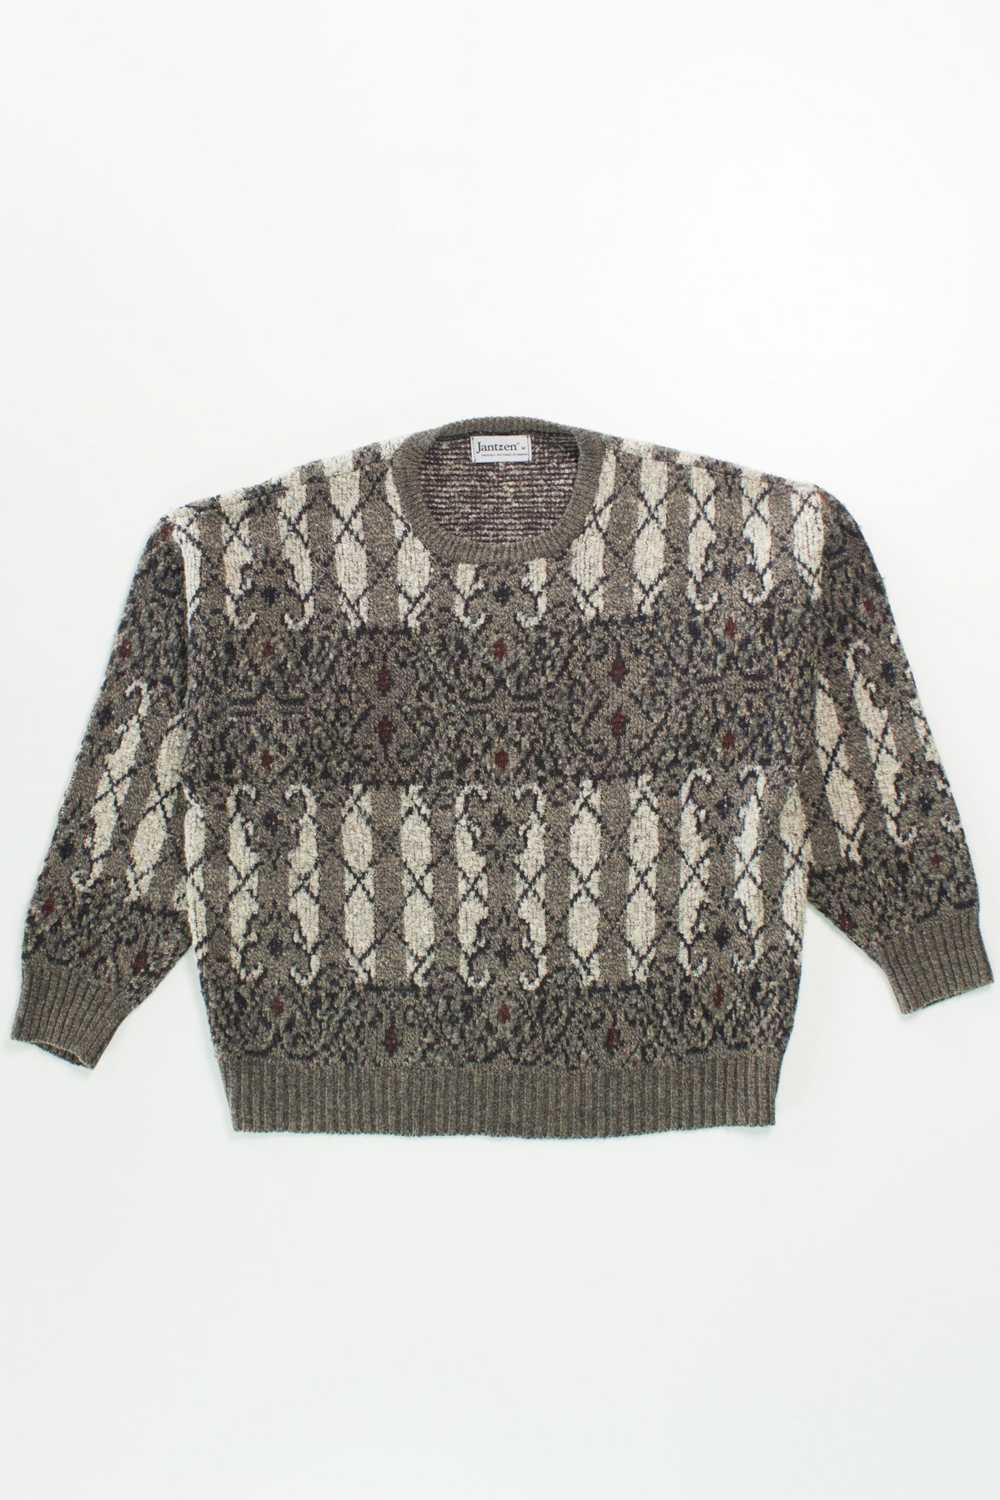 Vintage Jantzen Brown 80s Sweater - image 2